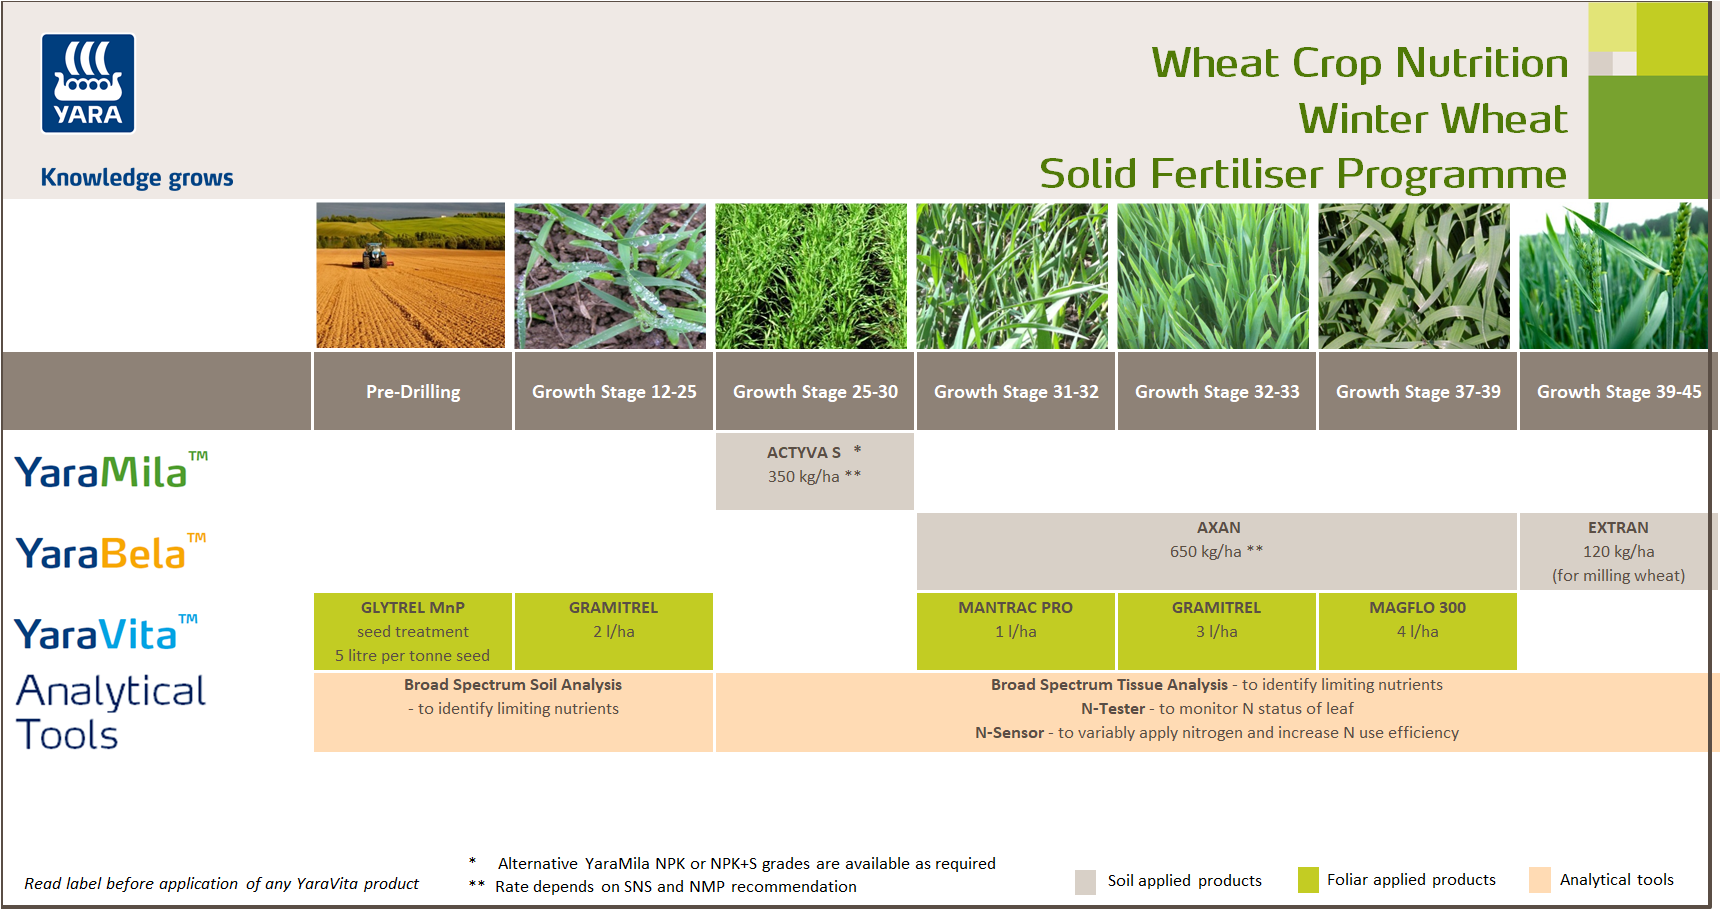 Winter wheat fertiliser programme